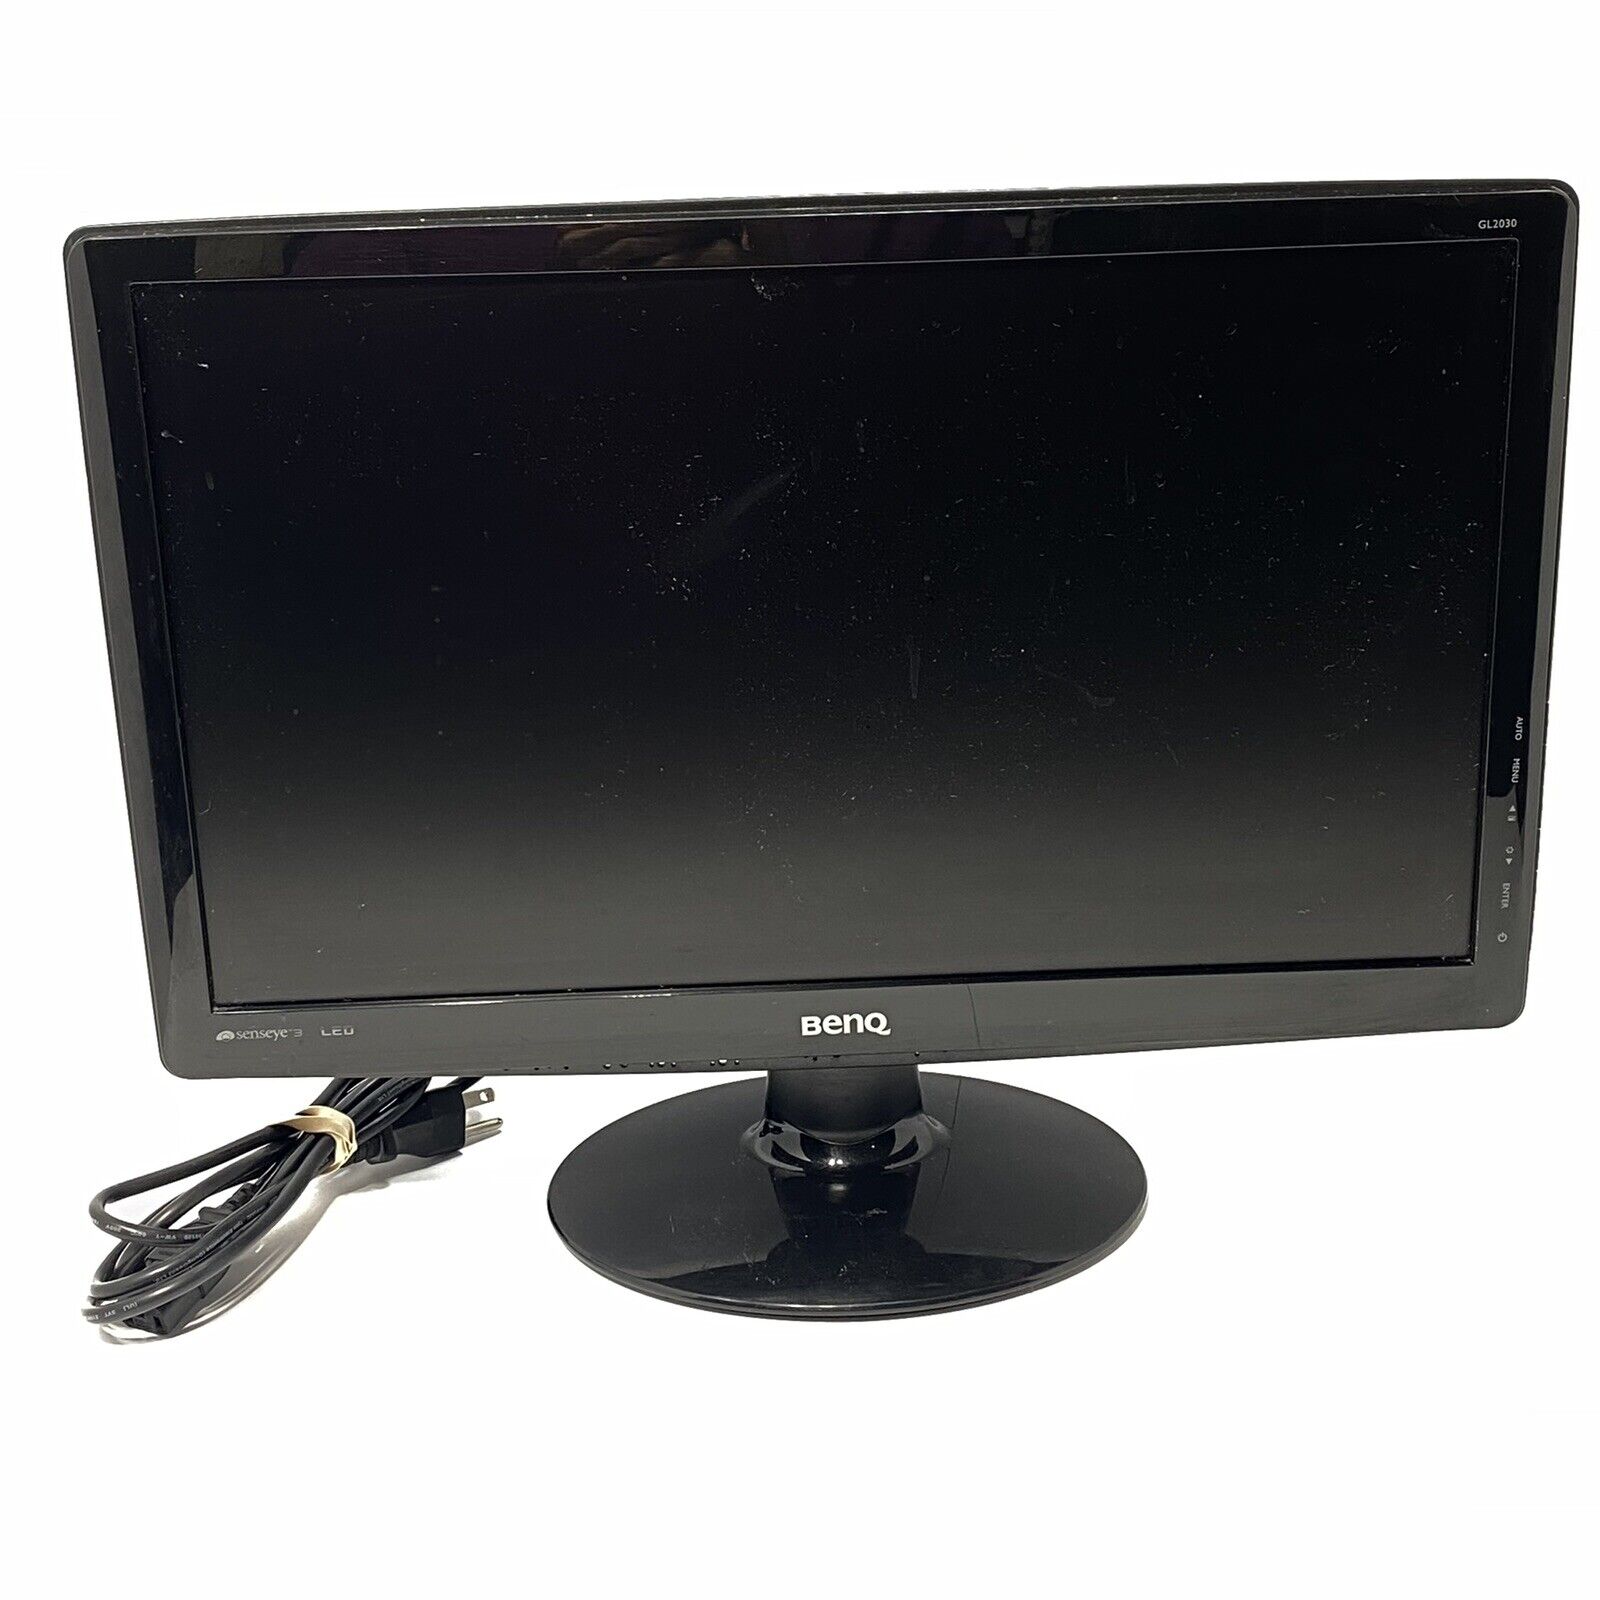 BenQ Model GL2030-T 20" LED Backlit Flat Panel LCD Monitor Tested Working